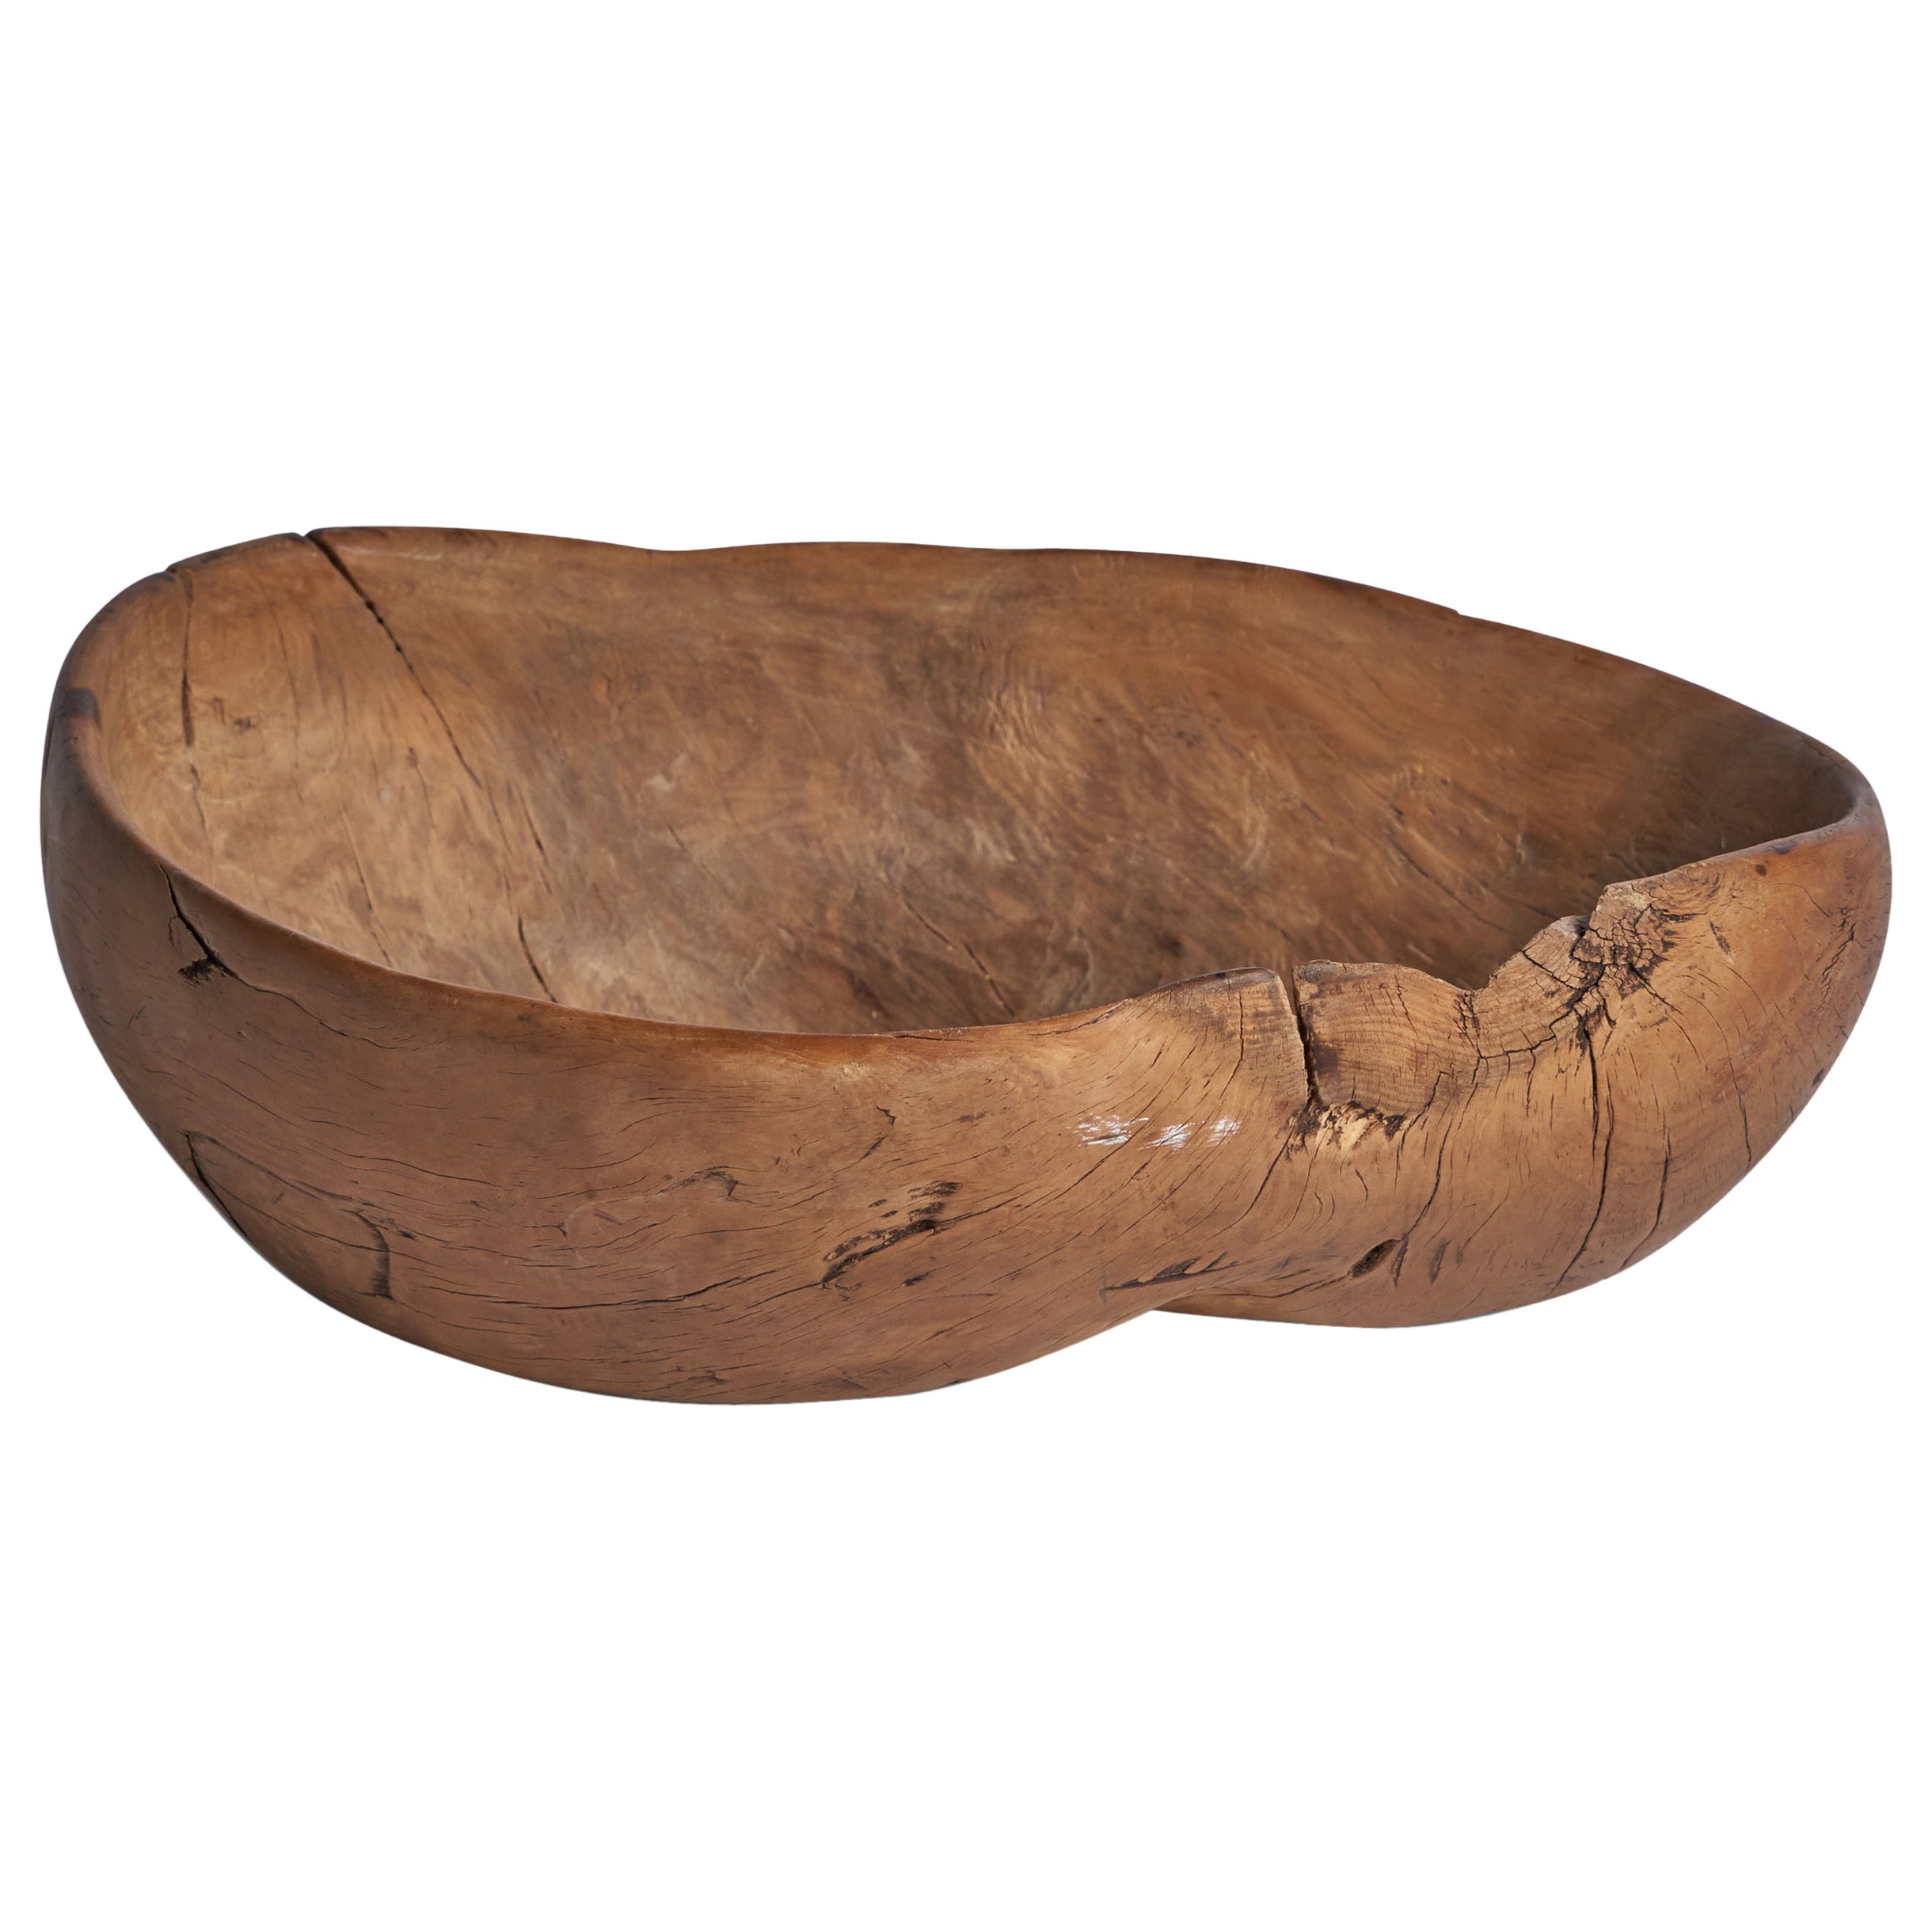 Swedish Craft, Bowl, Burl Wood, Sweden, 19th Century